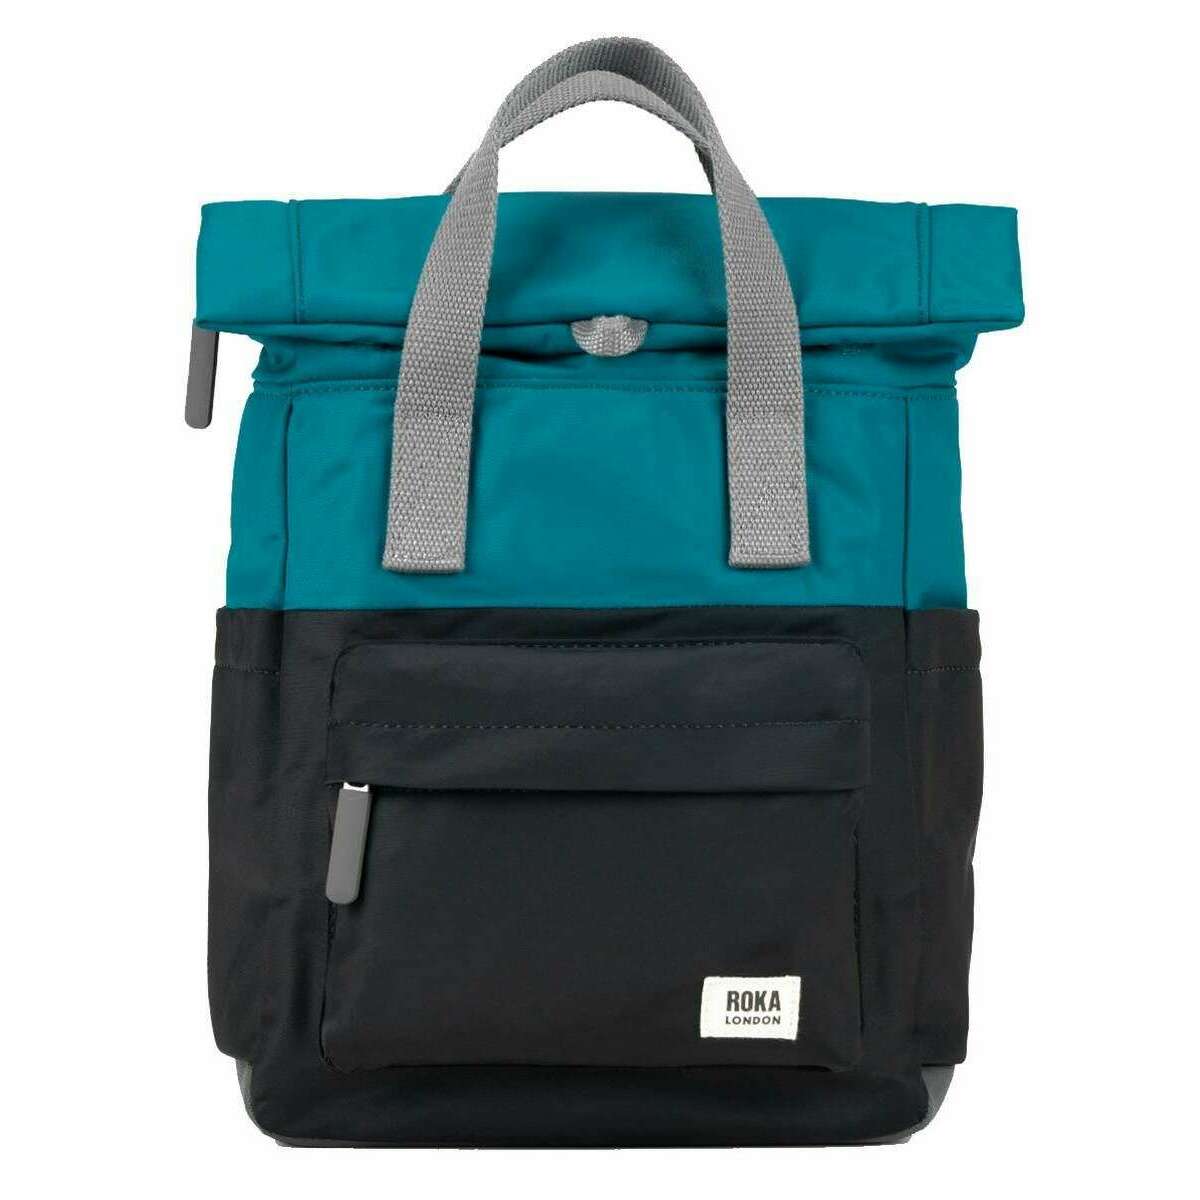 Roka Canfield B Small Creative Waste Two Tone Recycled Nylon Backpack - Marine Blue/Black